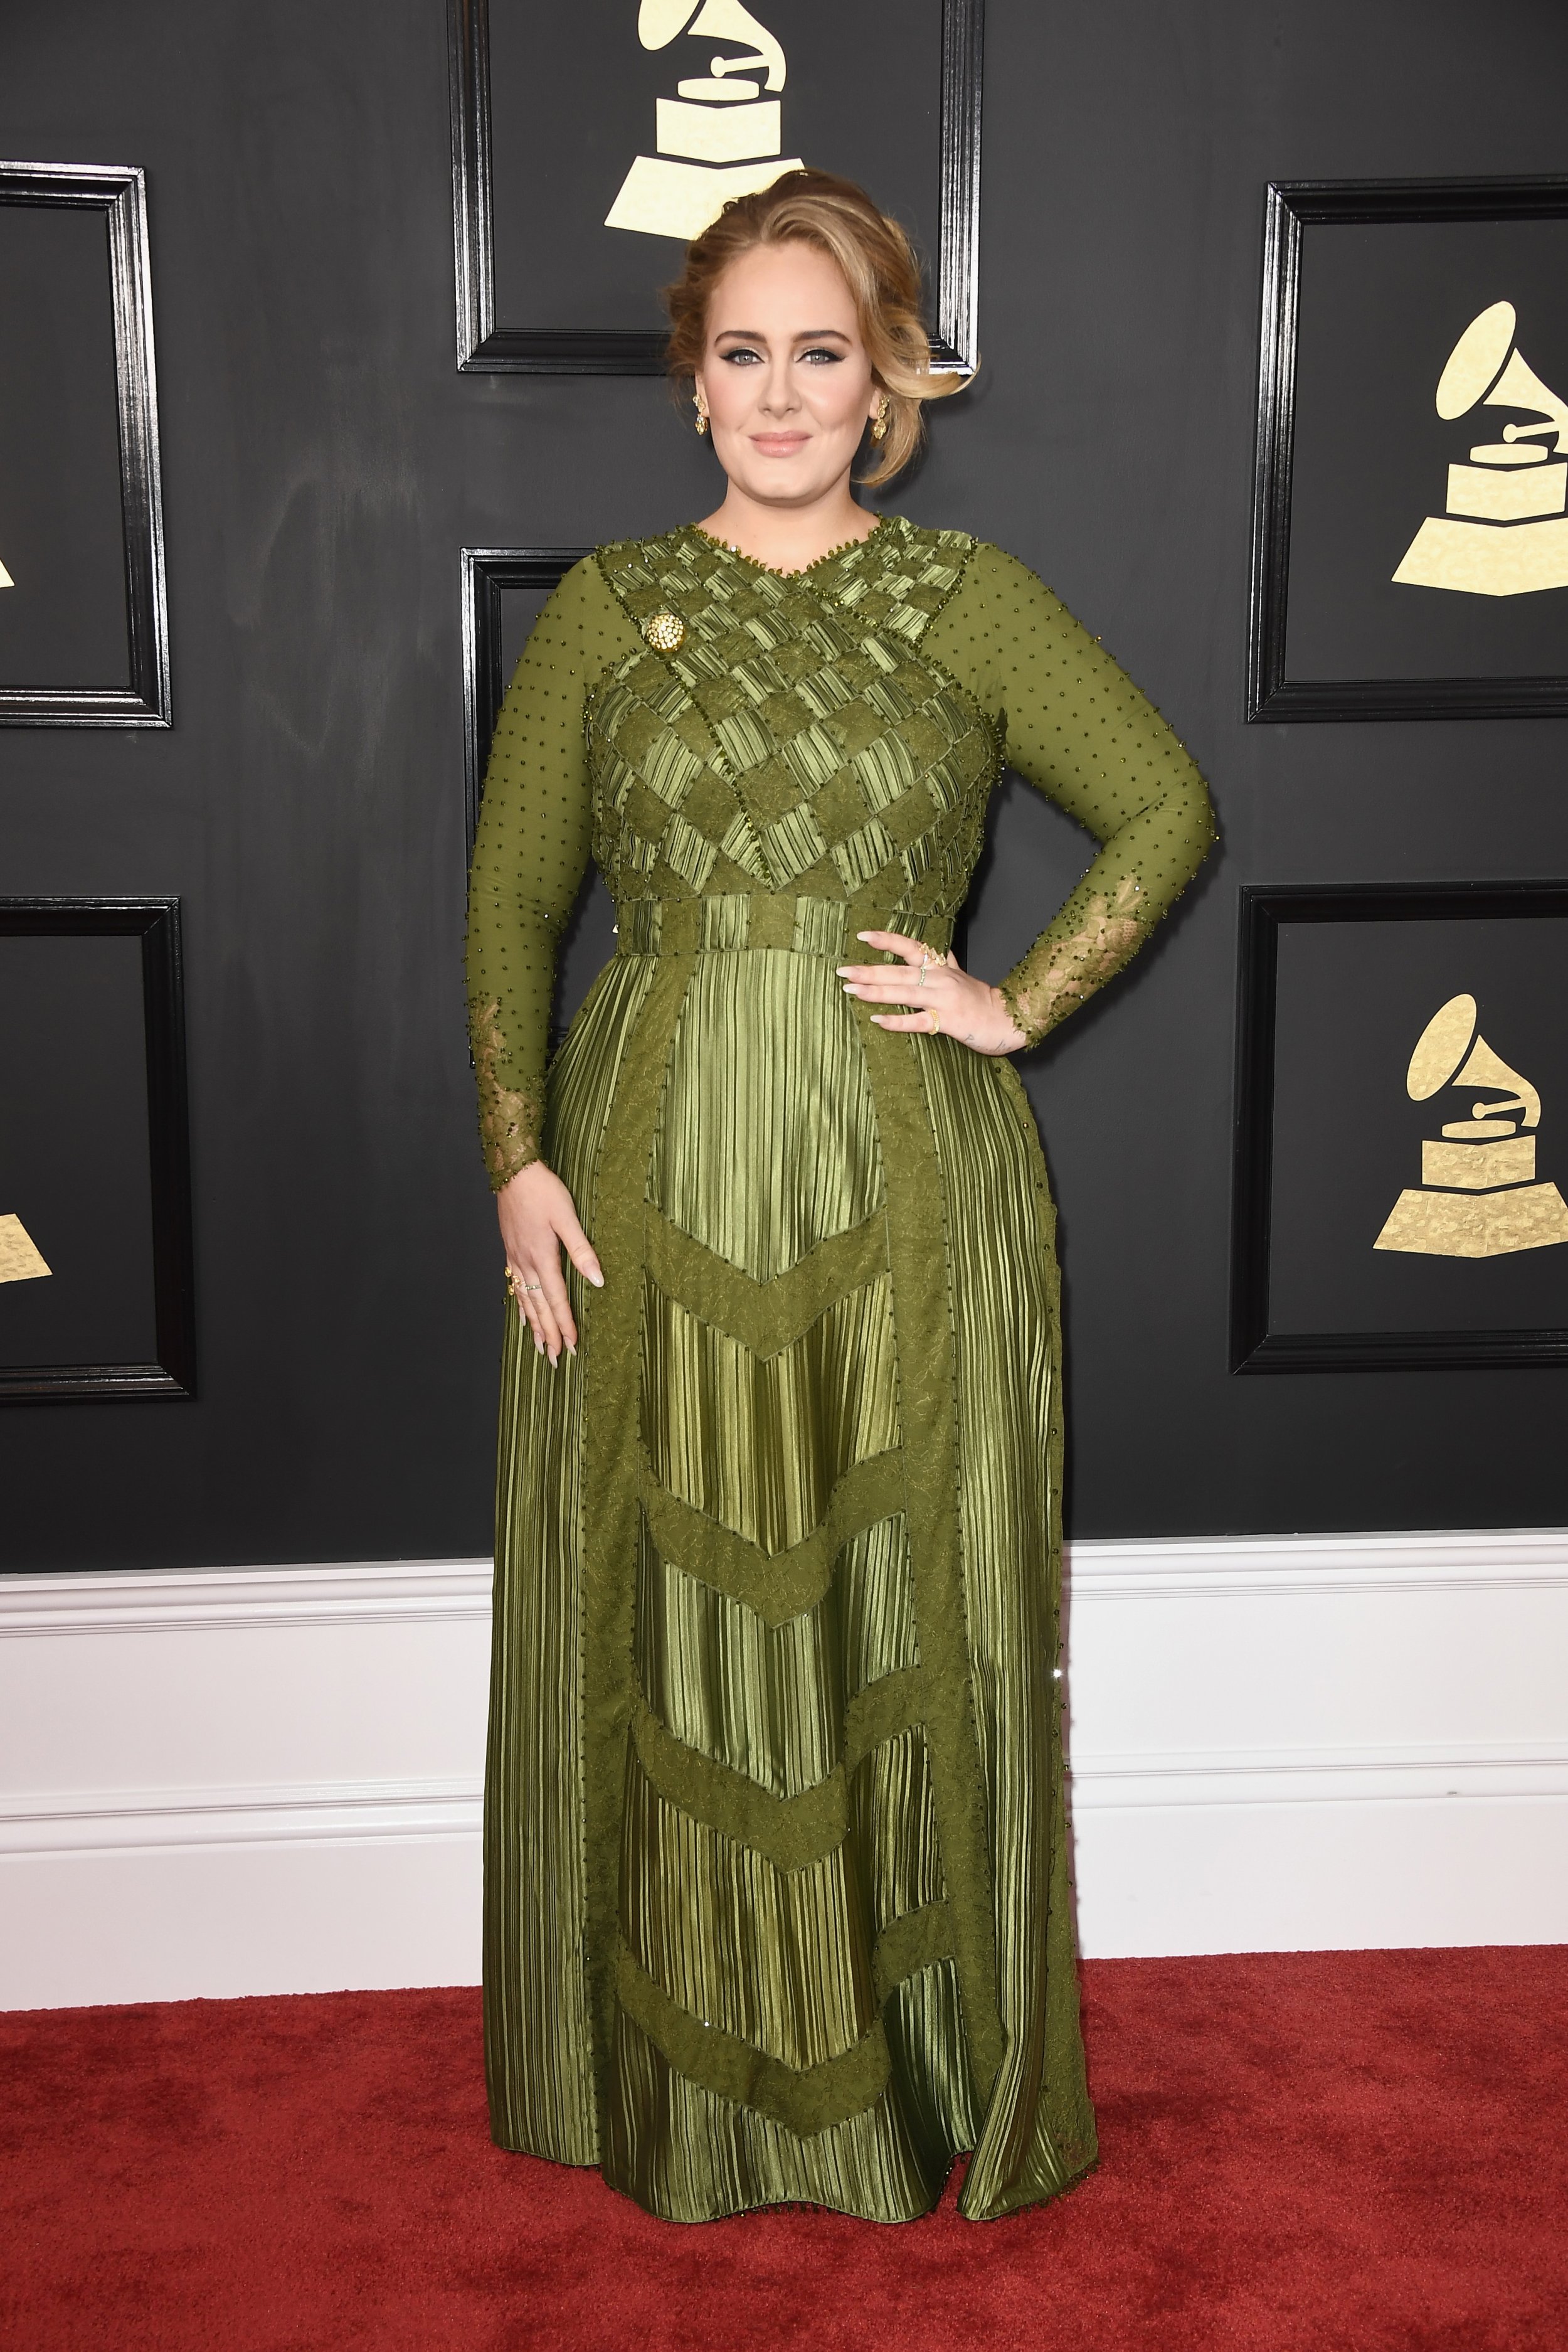 Grammy Awards 2017 Red Carpet Photos Adele